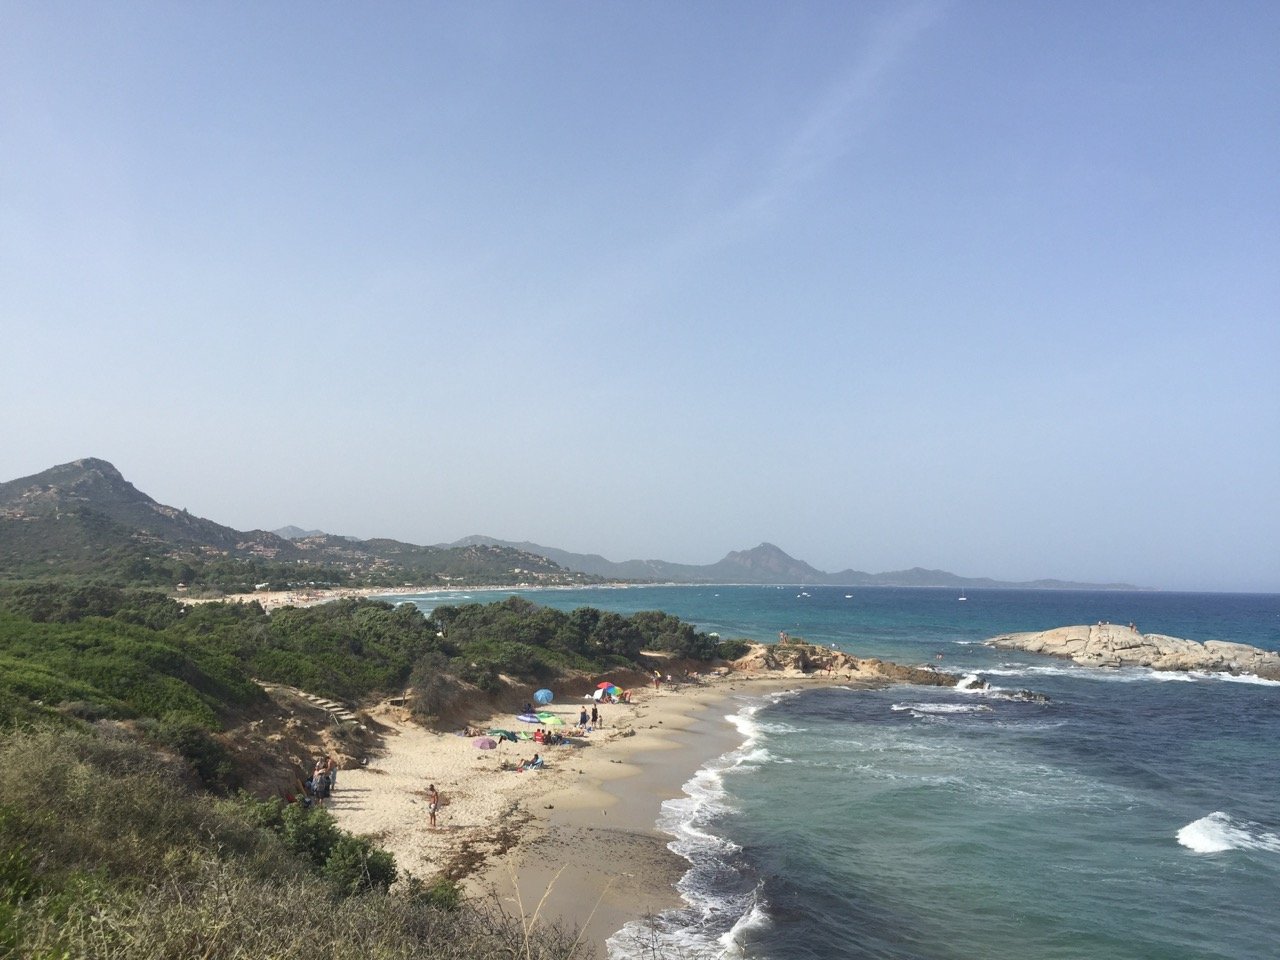 A beach on the Costa Rei 